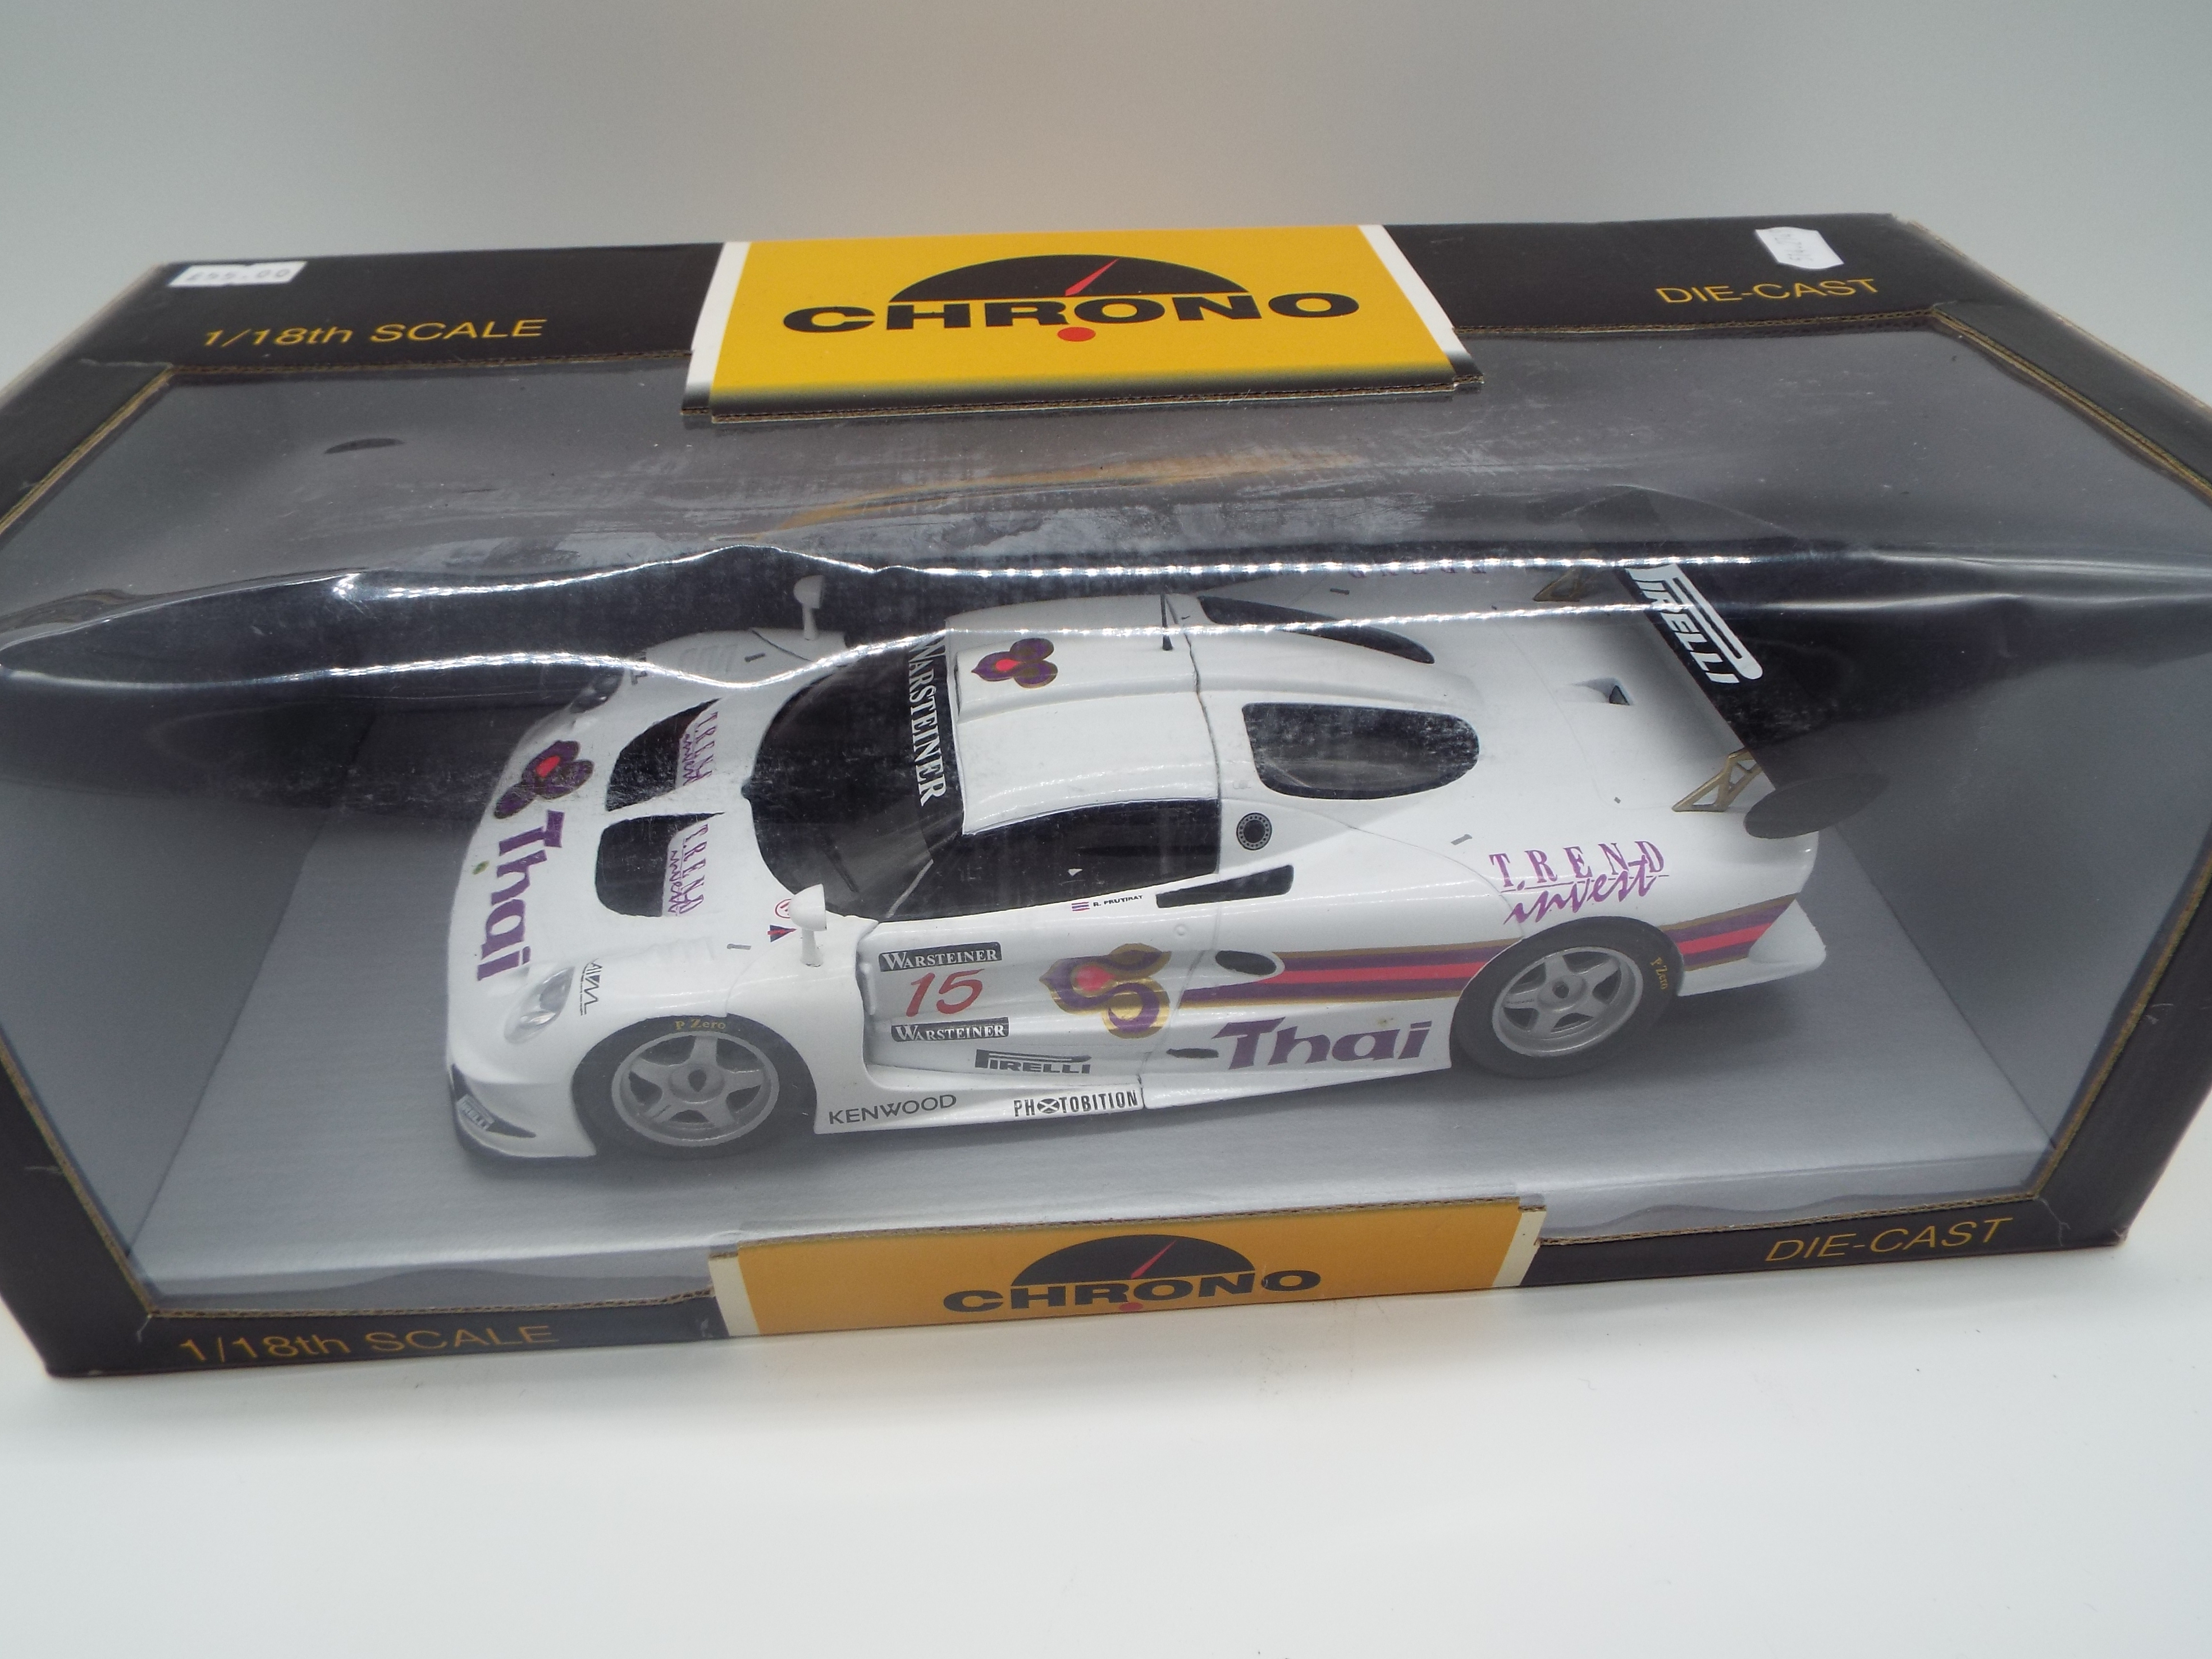 Chrono - a 1:18 scale model diecast racing car,